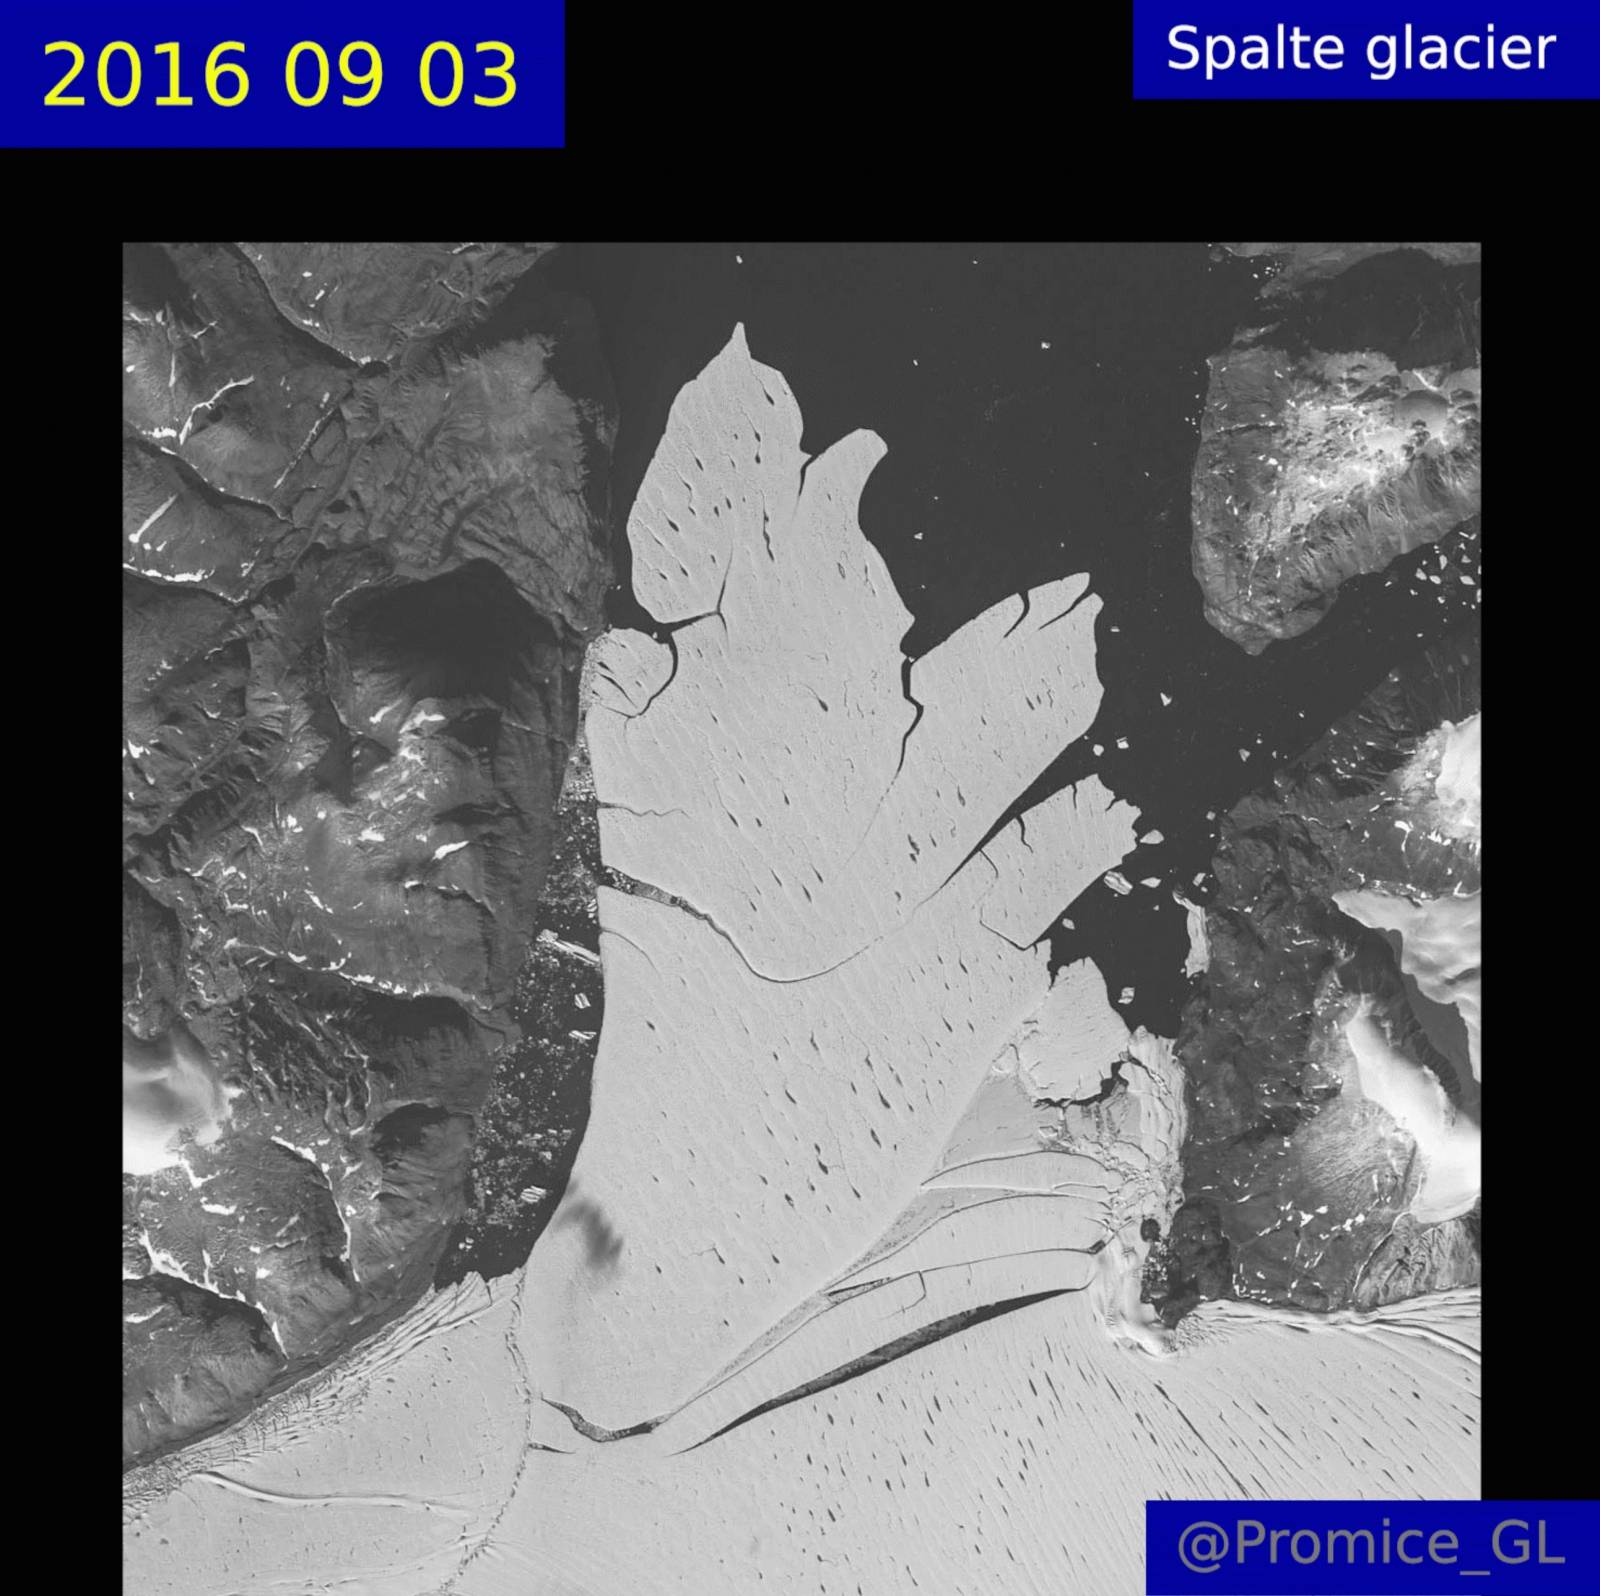 A satellite image shows the Spalte glacier in 2016